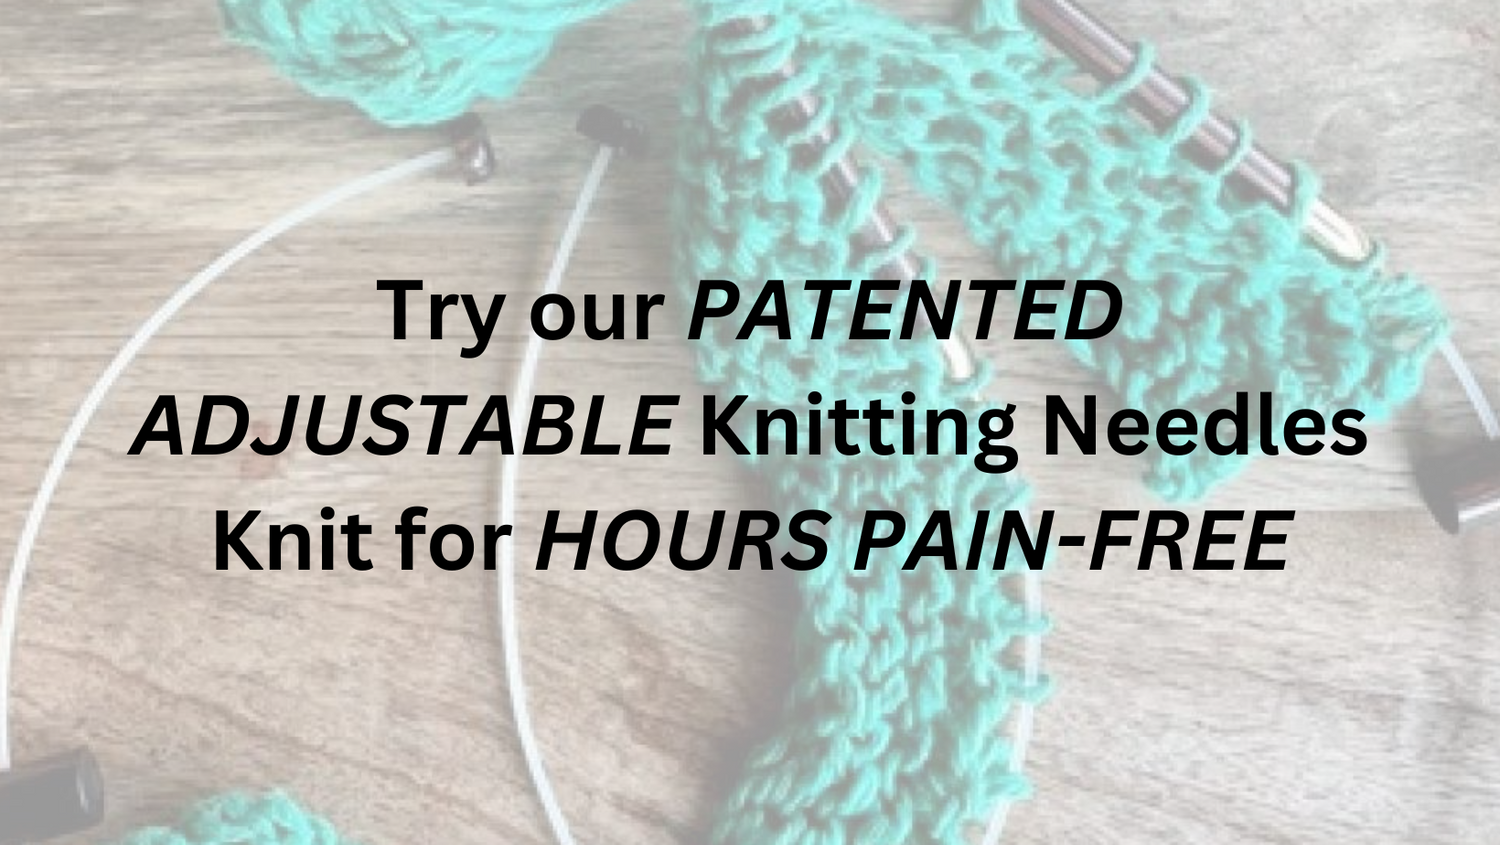 2 Pcs Crochet Tension Rings Knitting Loop Knitted Hooks Adjustable